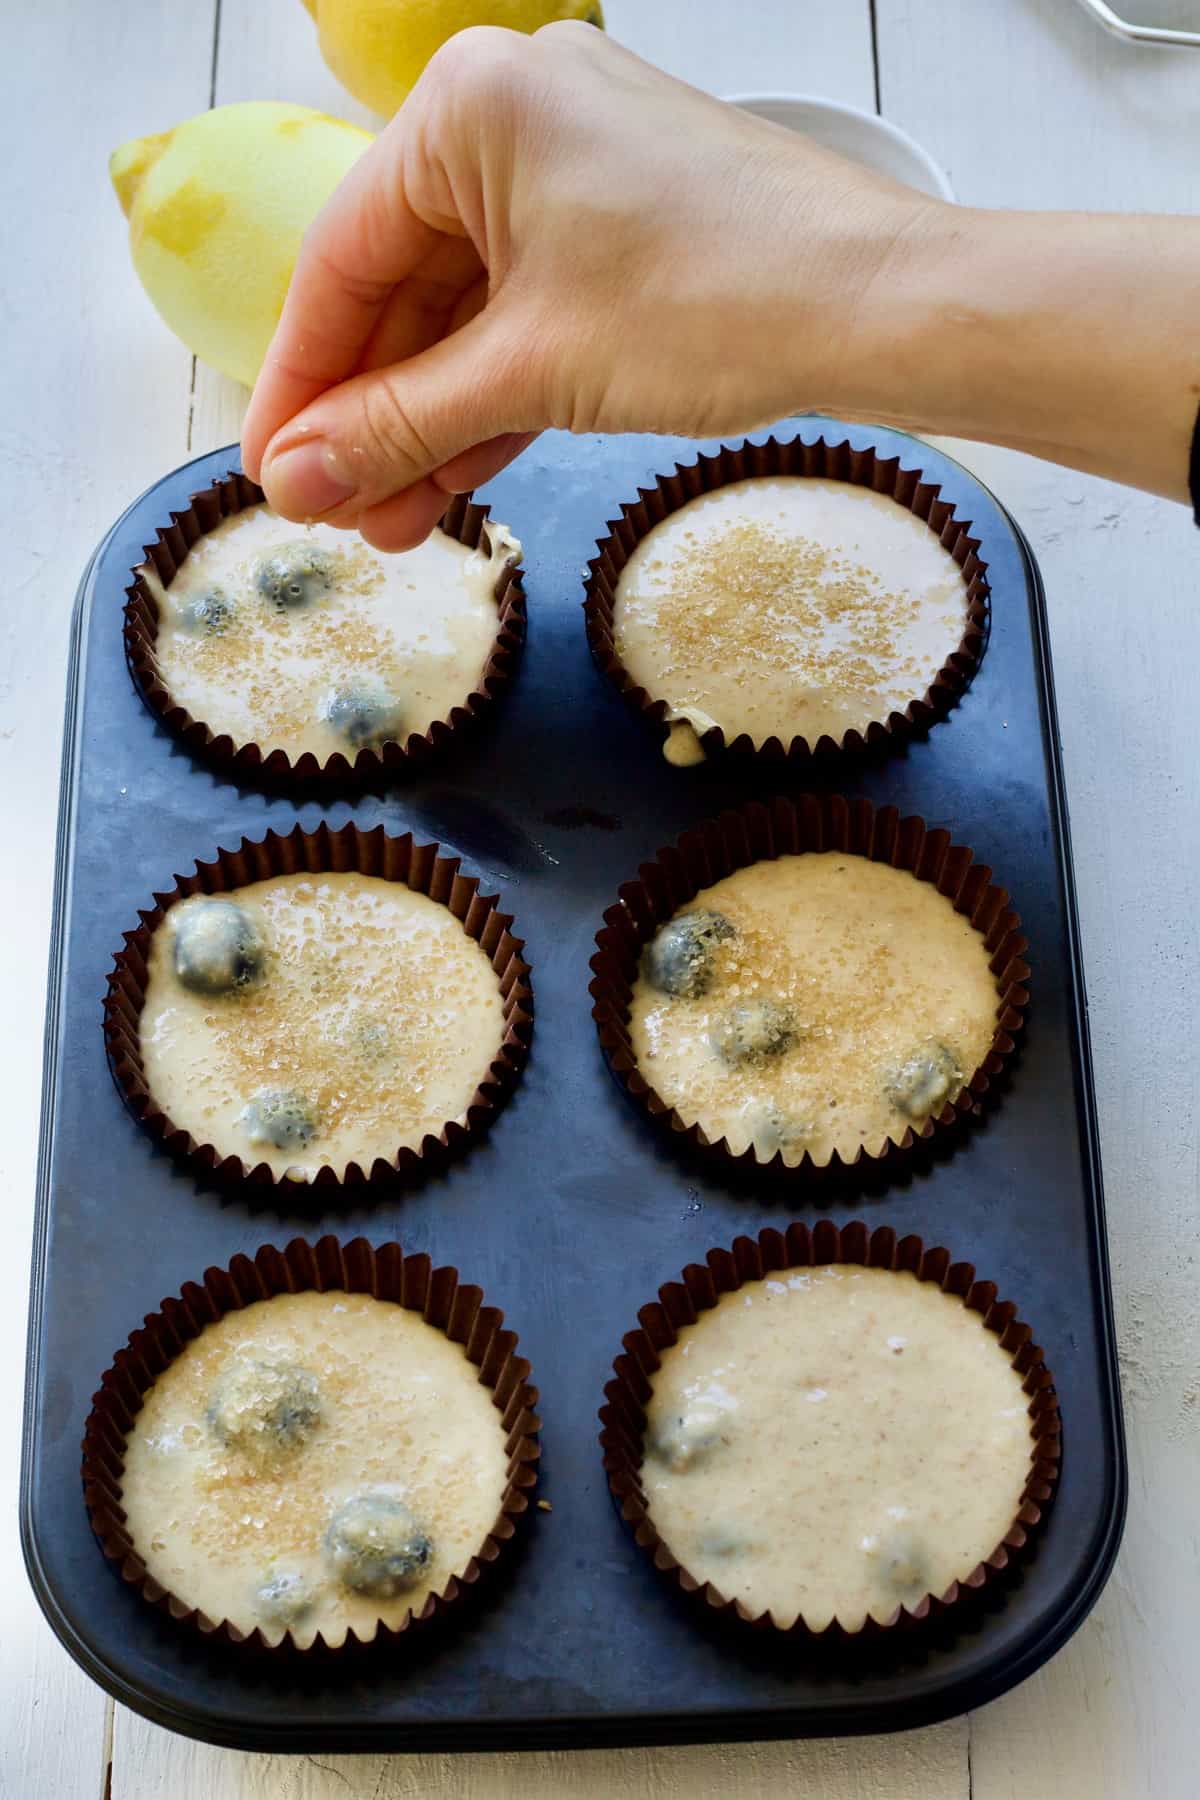 Hand sprinkling sugar over unbaked muffins.